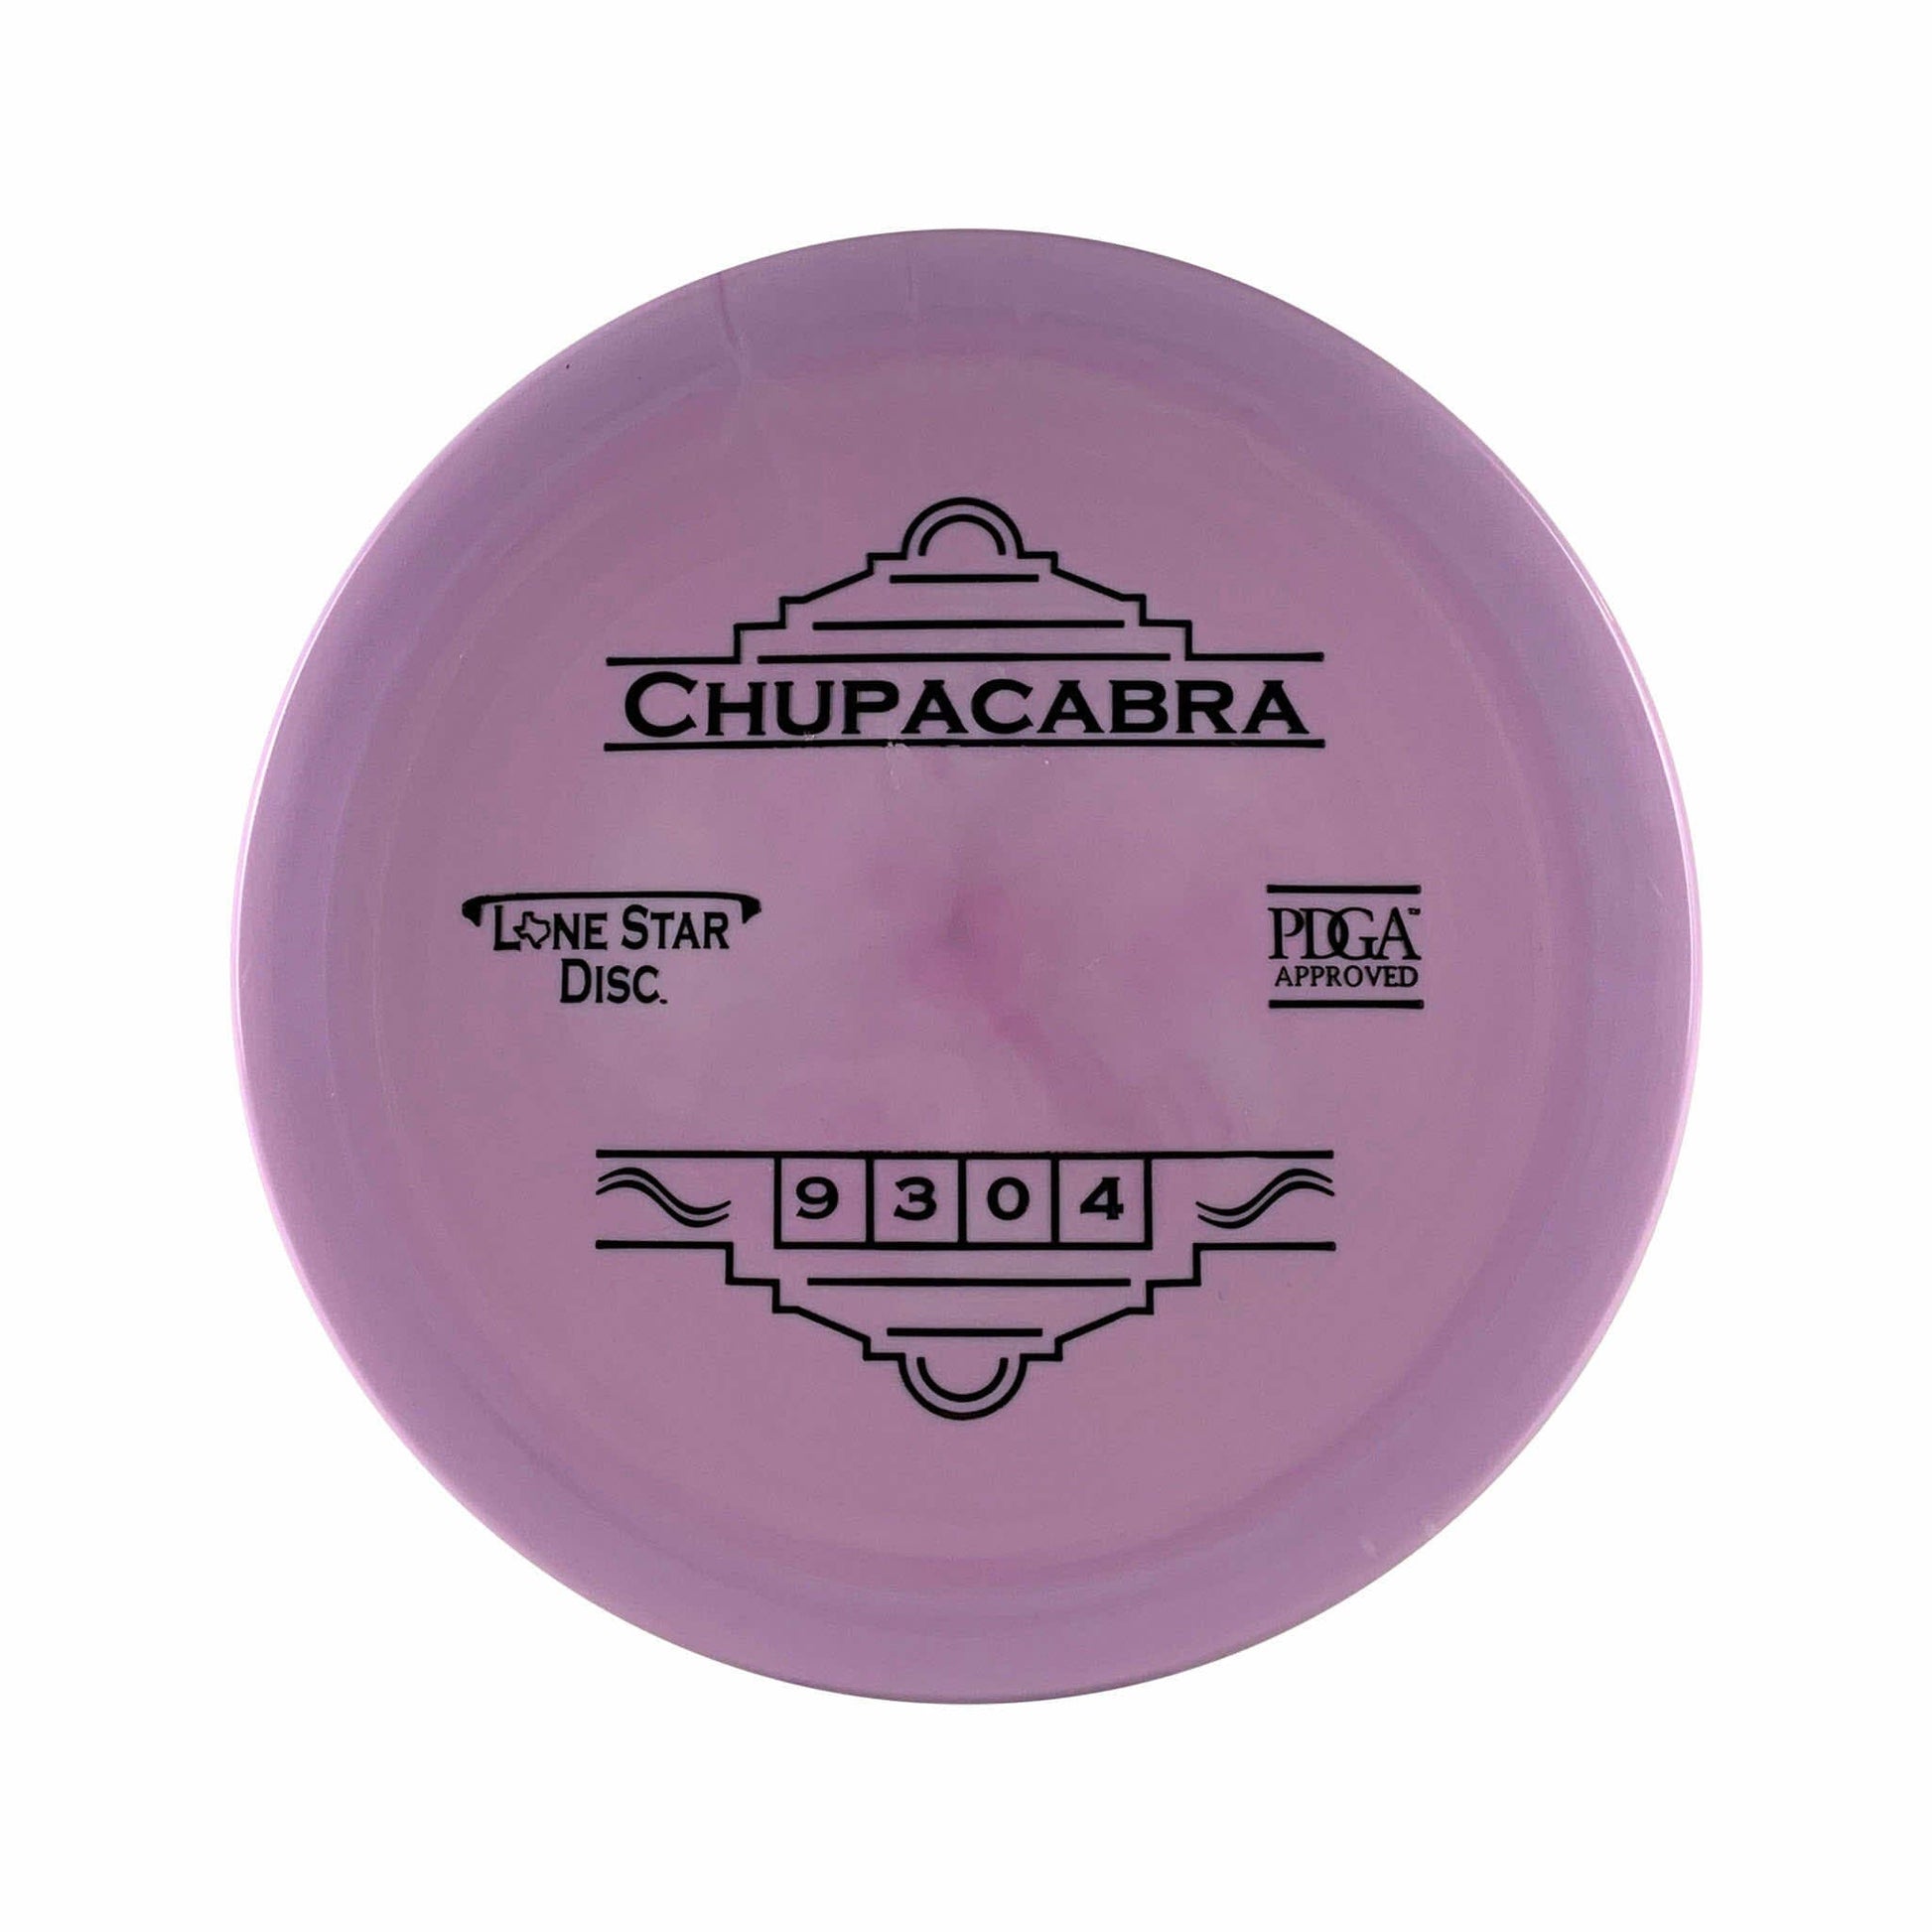 Lima Chupacabra Disc Lonestar Disc multi / purple 158 